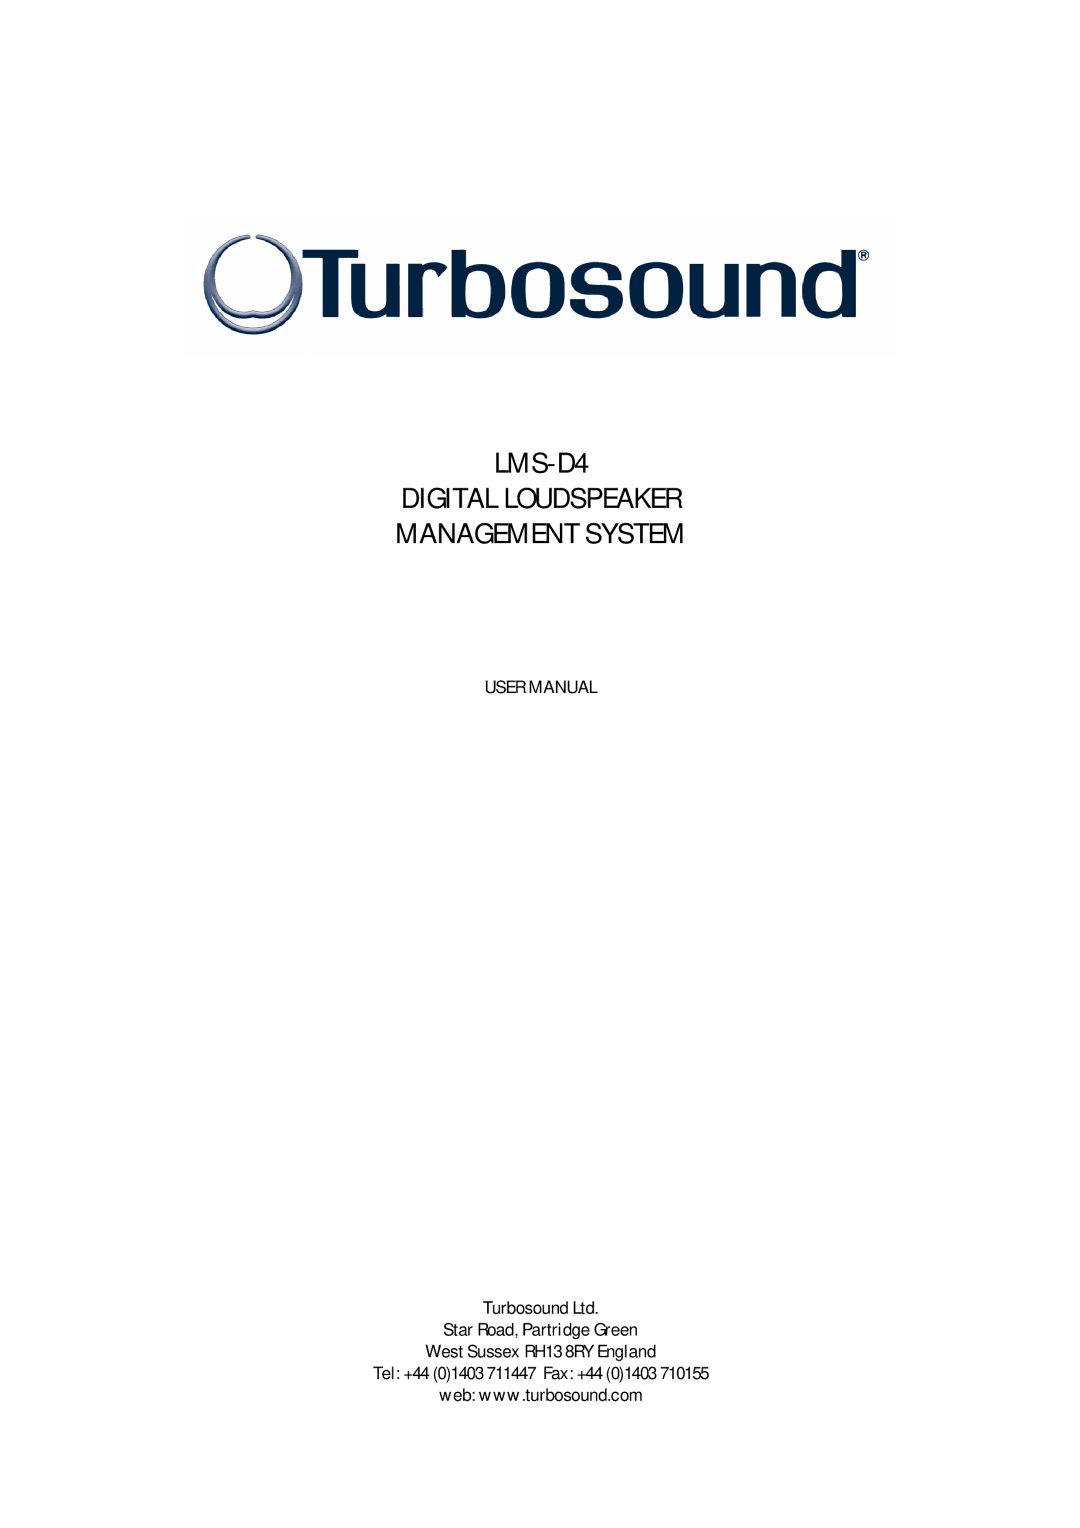 Turbosound LMS-D4 user manual 